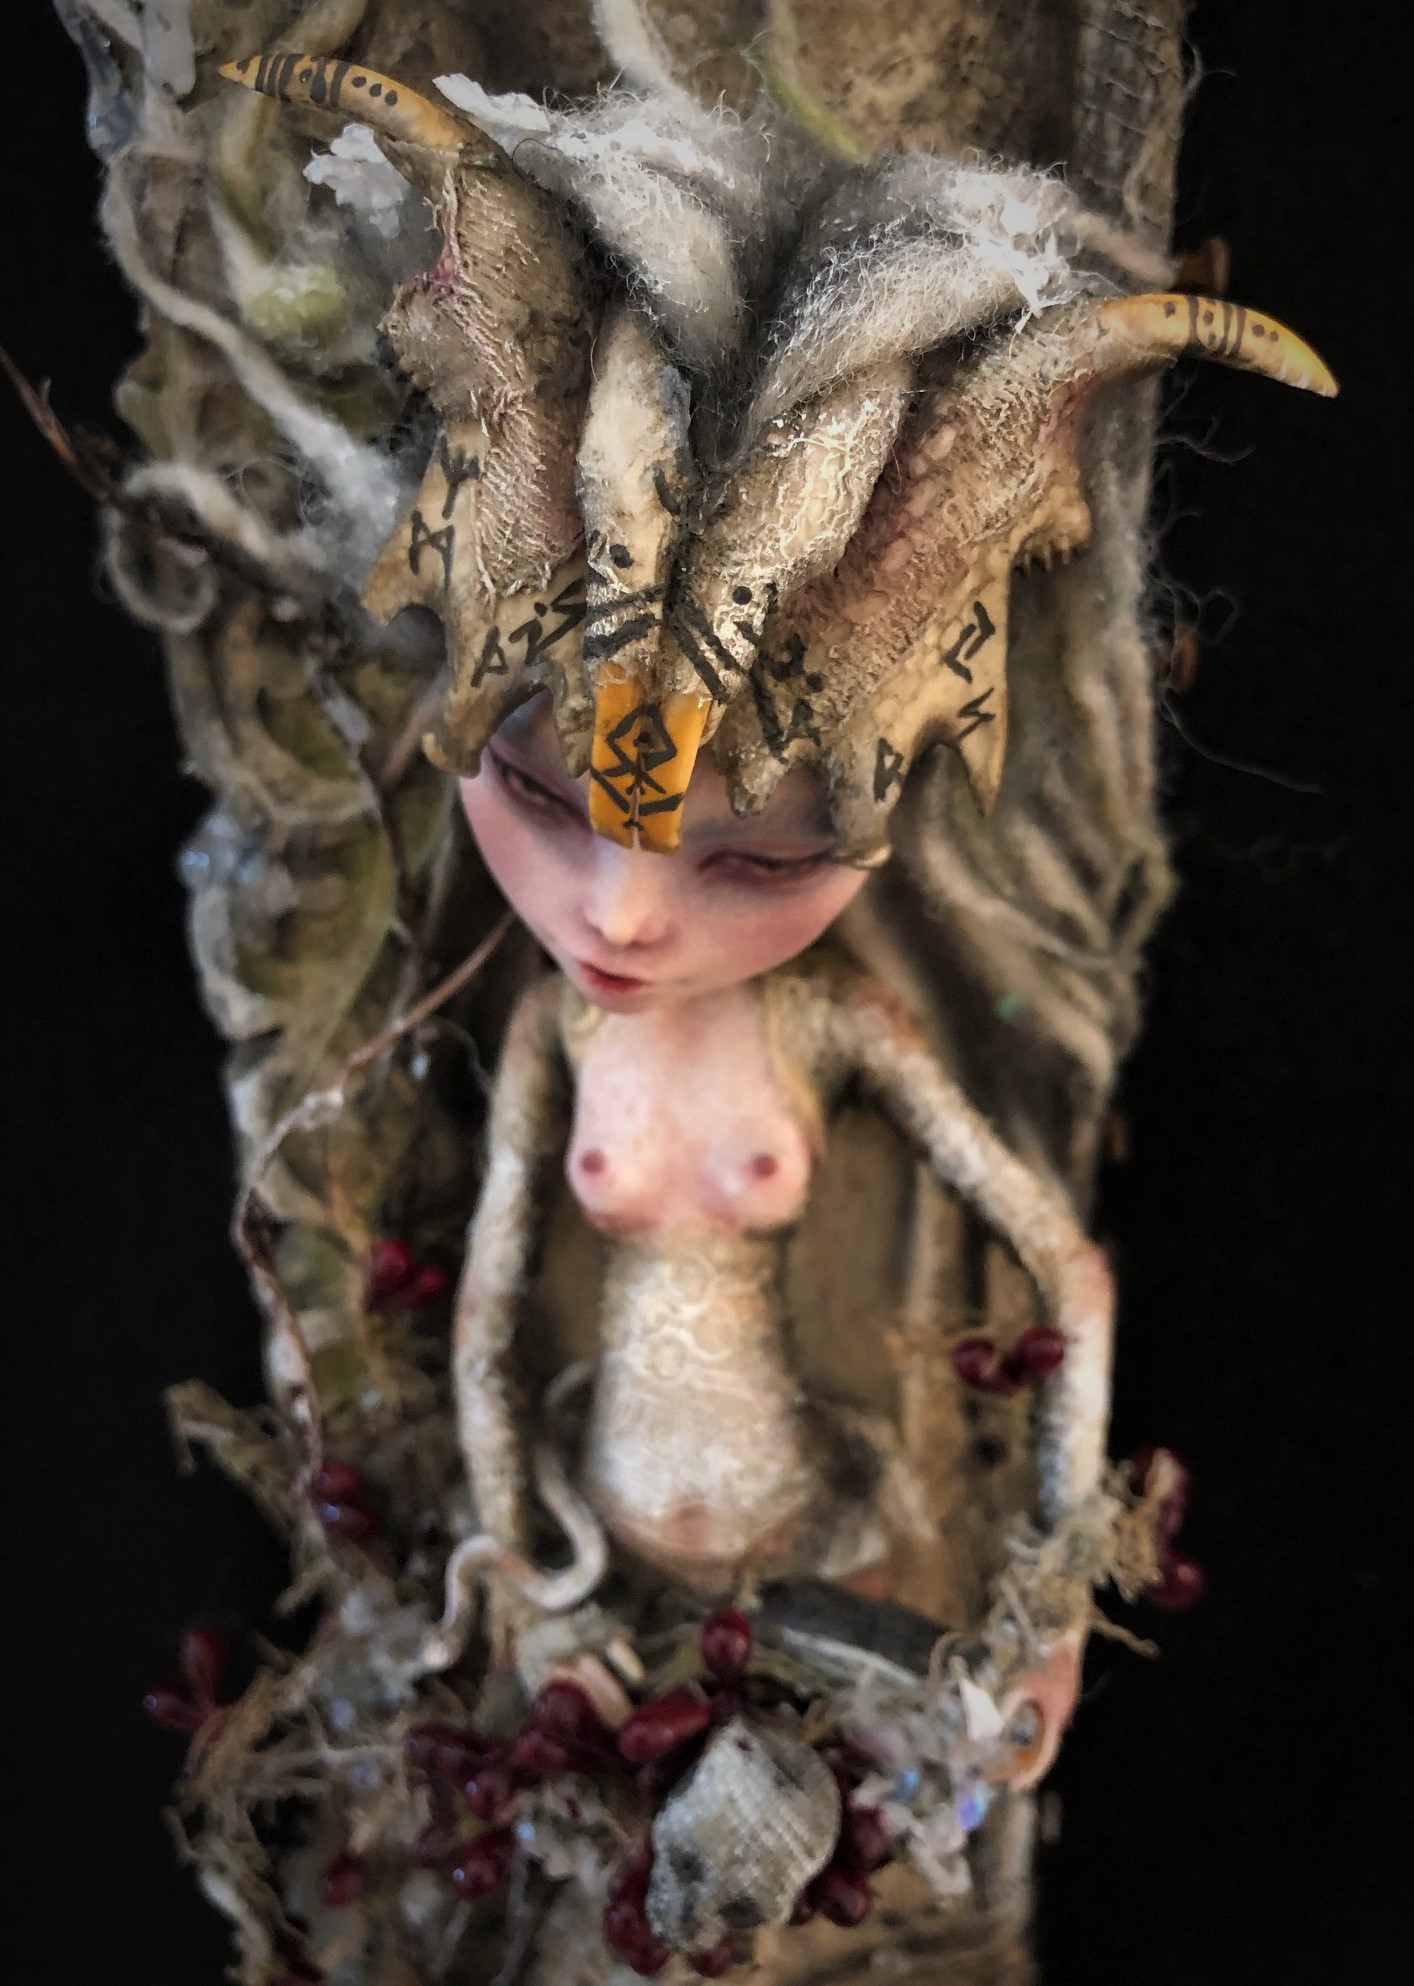 Mixed media assemblage repainted goth pagan doll